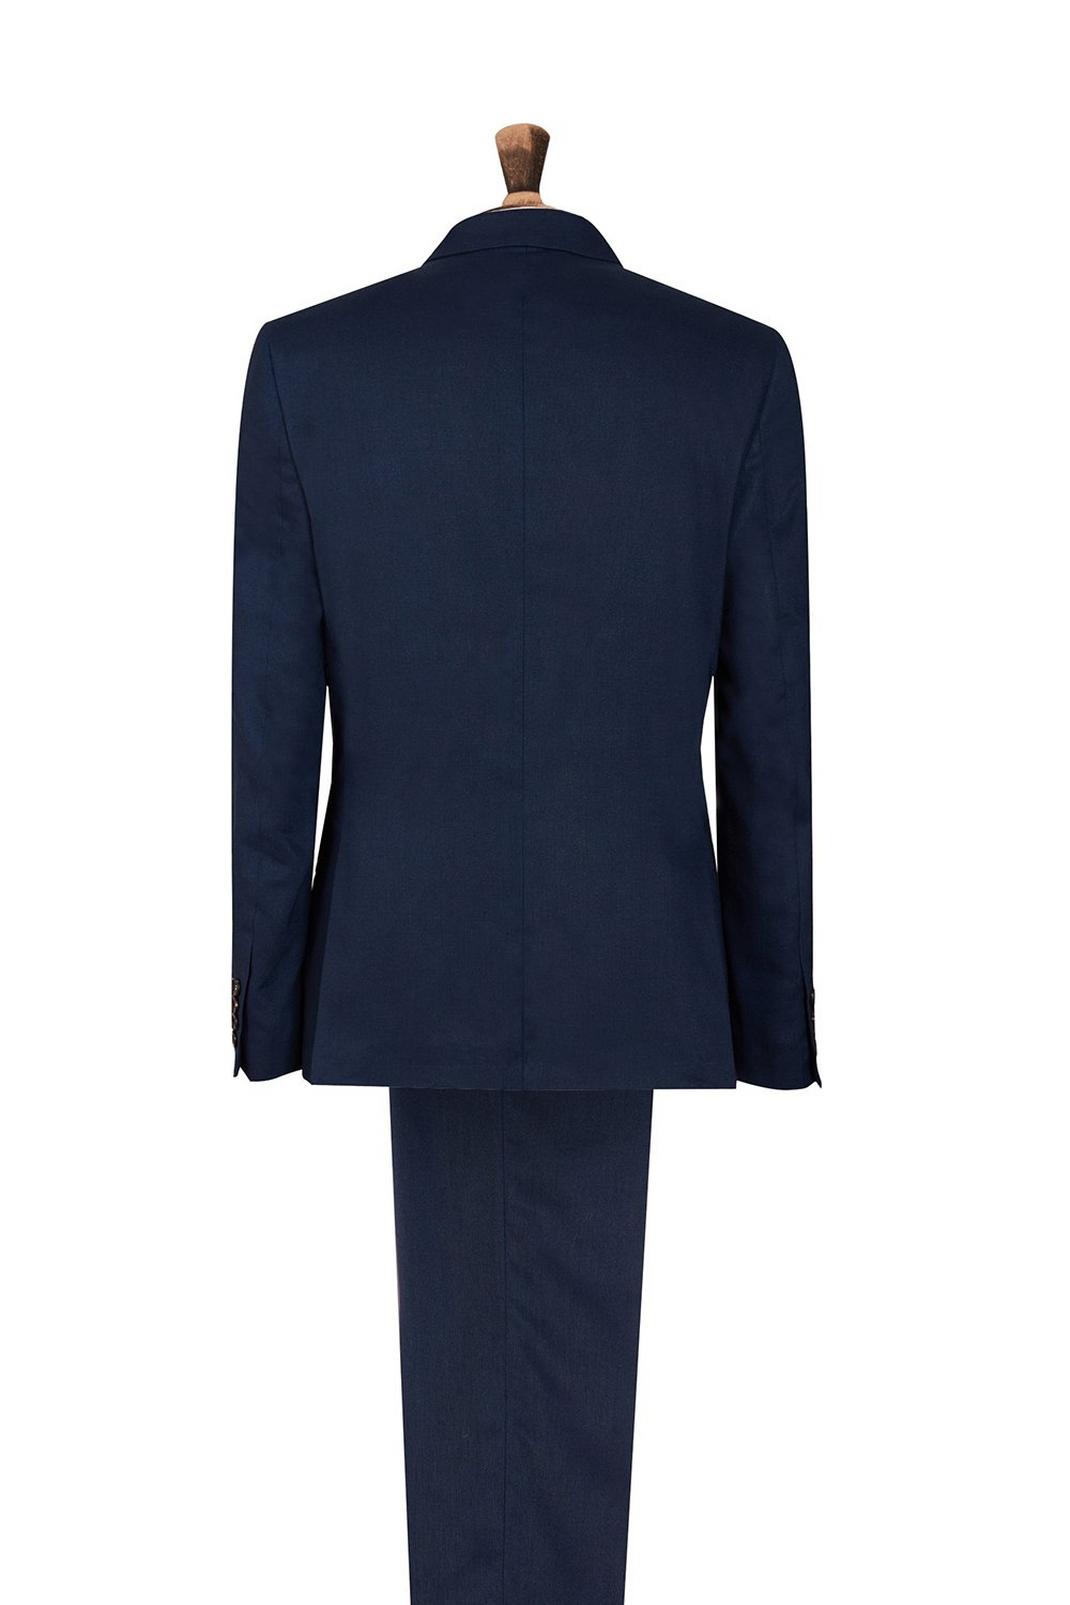 Cobalt Slim Fit Linen Suit Jacket | Burton UK